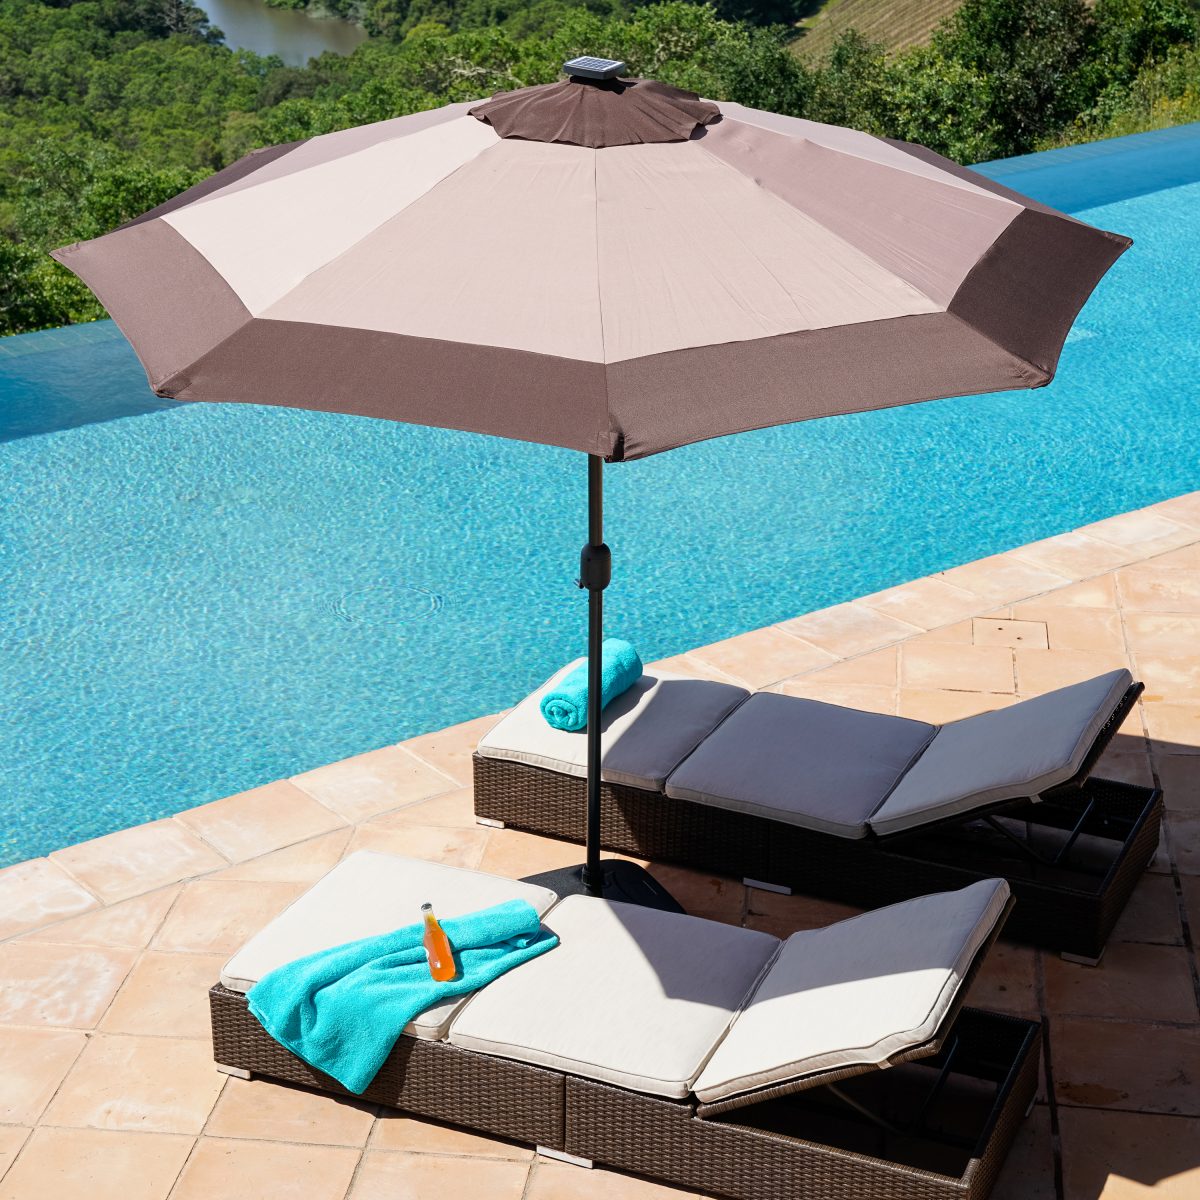 poolside-furniture-ideas-patio-umbrella